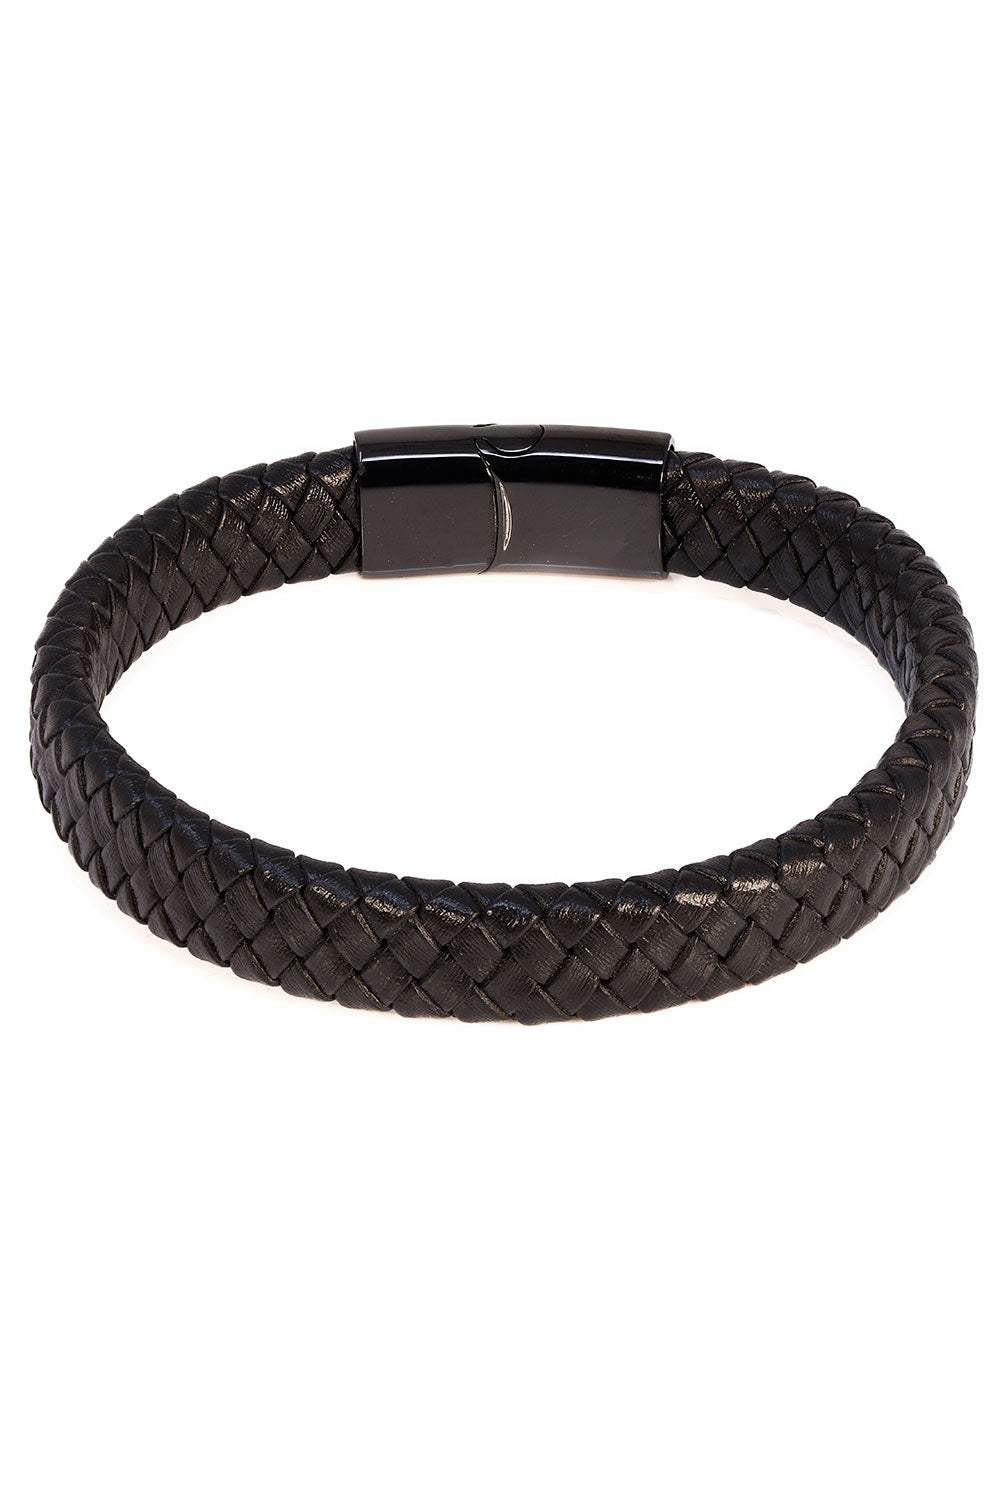 Barabas Unisex Braided Leather Magnetic Closure Bracelets 4LB02 Black